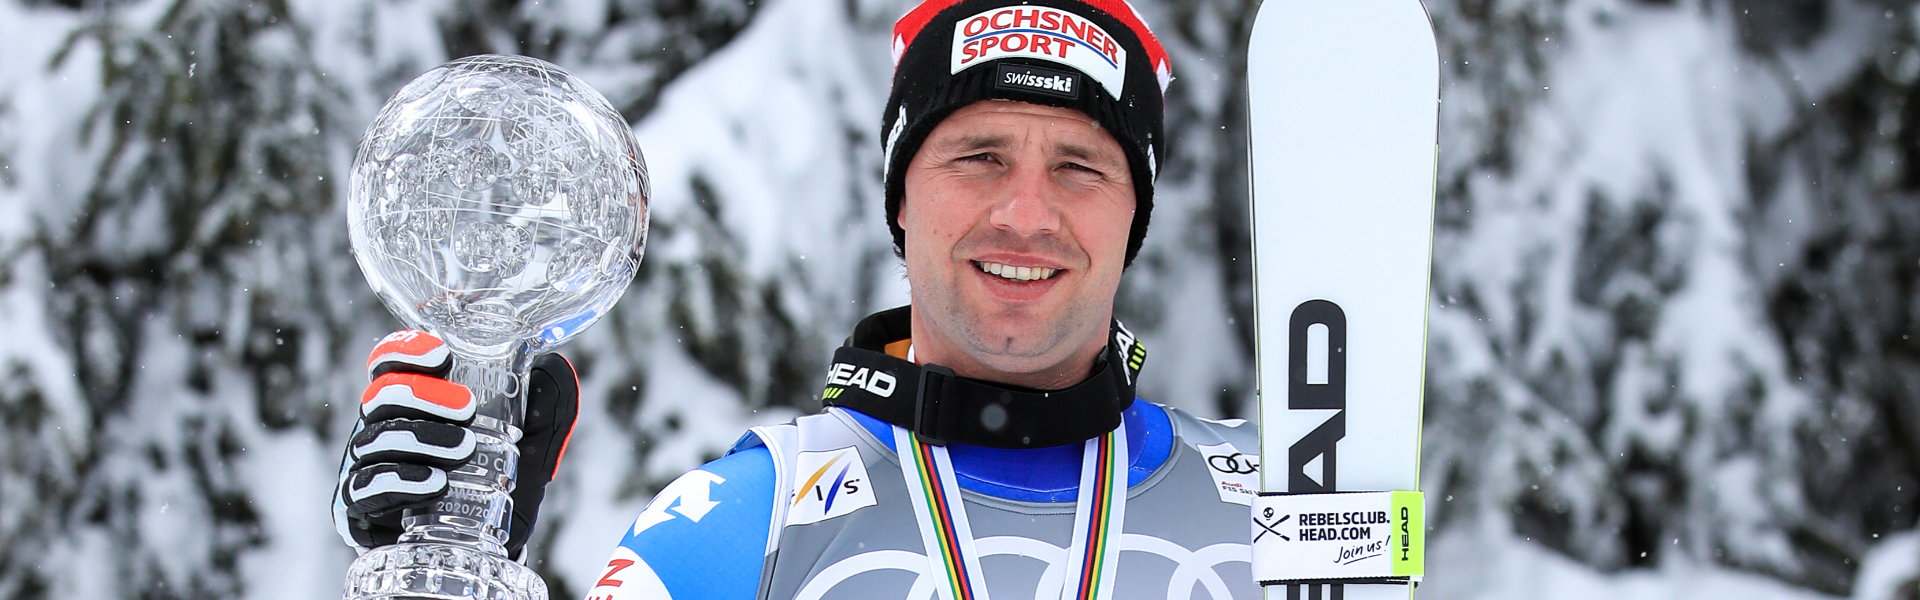 Beat Feuz in Kitzbühel – a top athlete says goodbye to ski racing